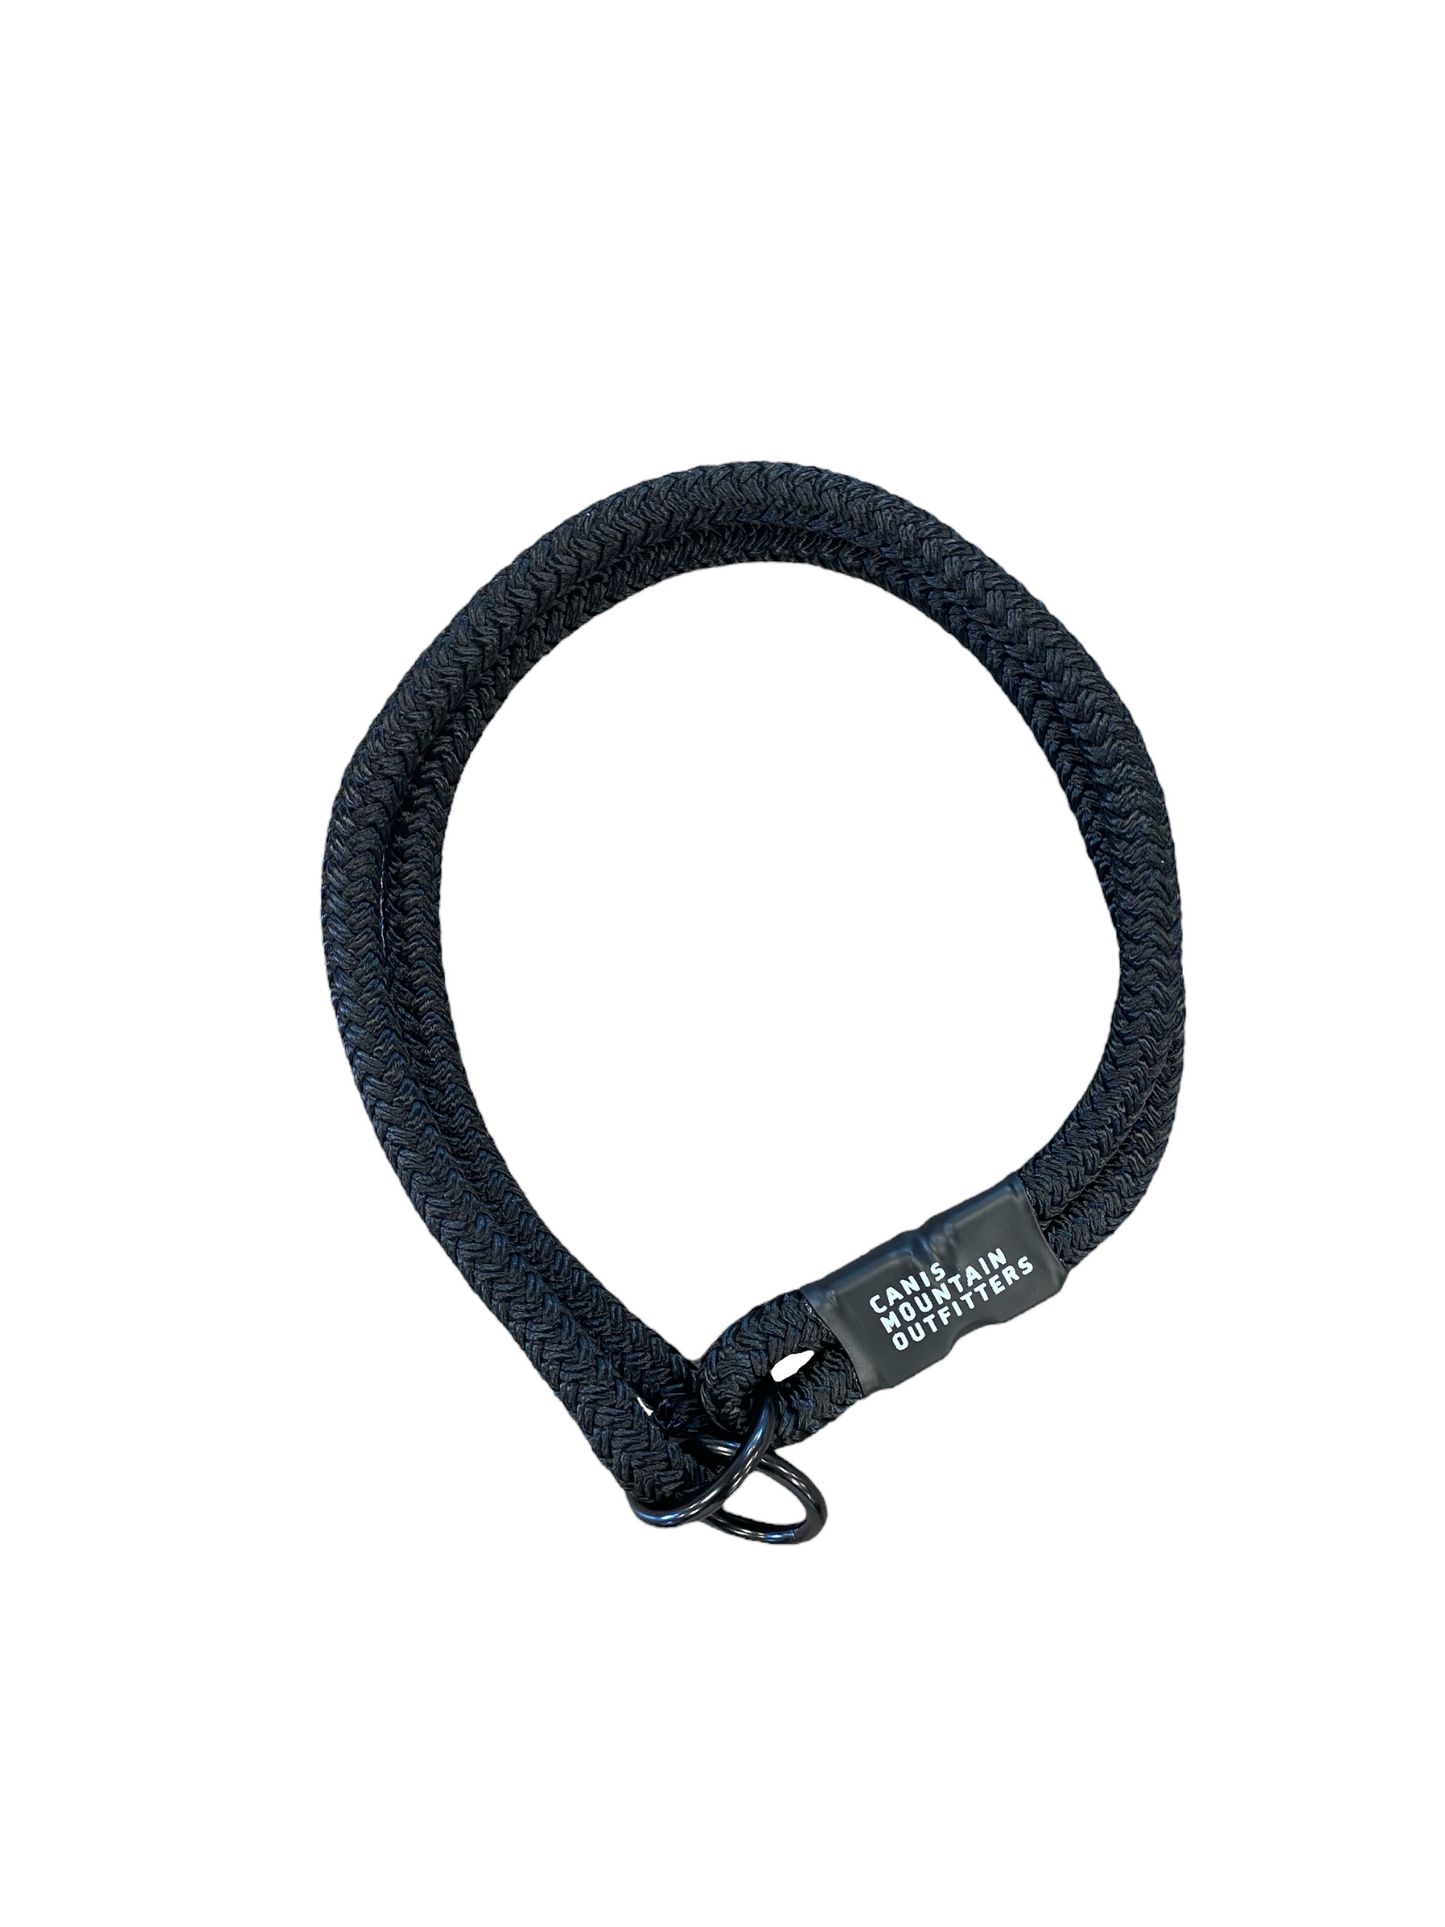 Slip Collar - Soft Series - Black 9.5mm